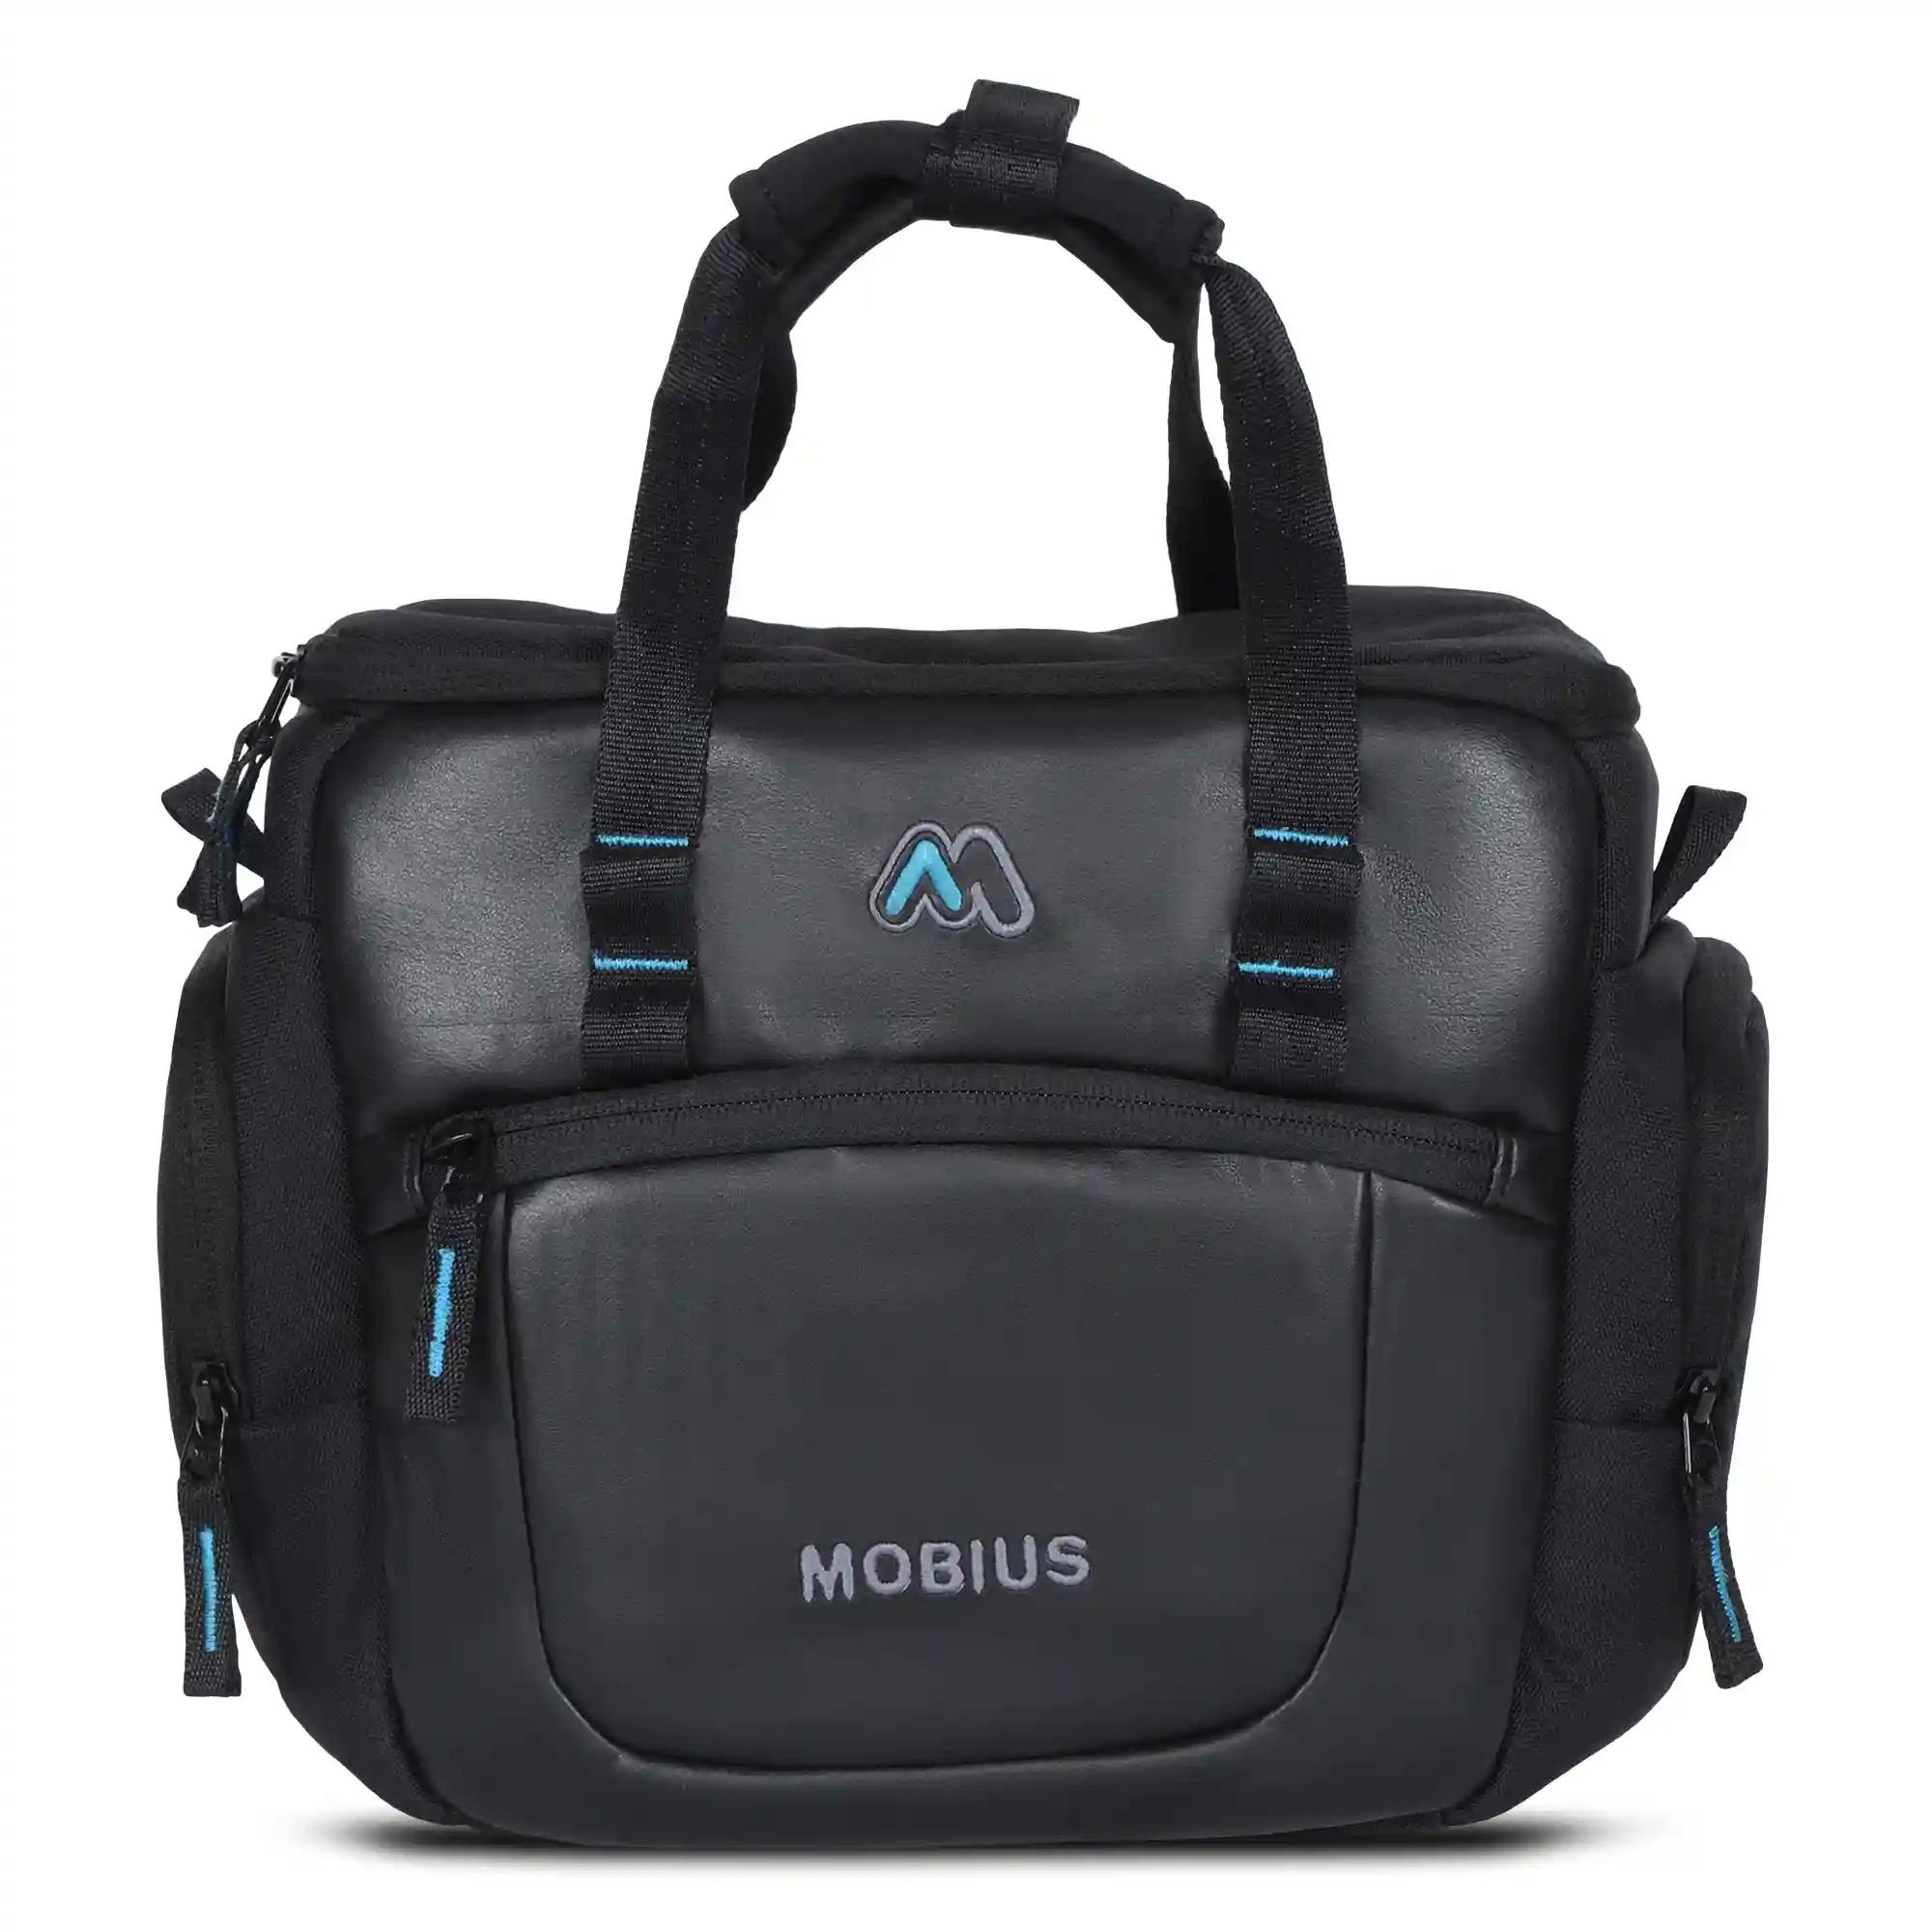 Mobius Hi Jack DSLR Sling Bag